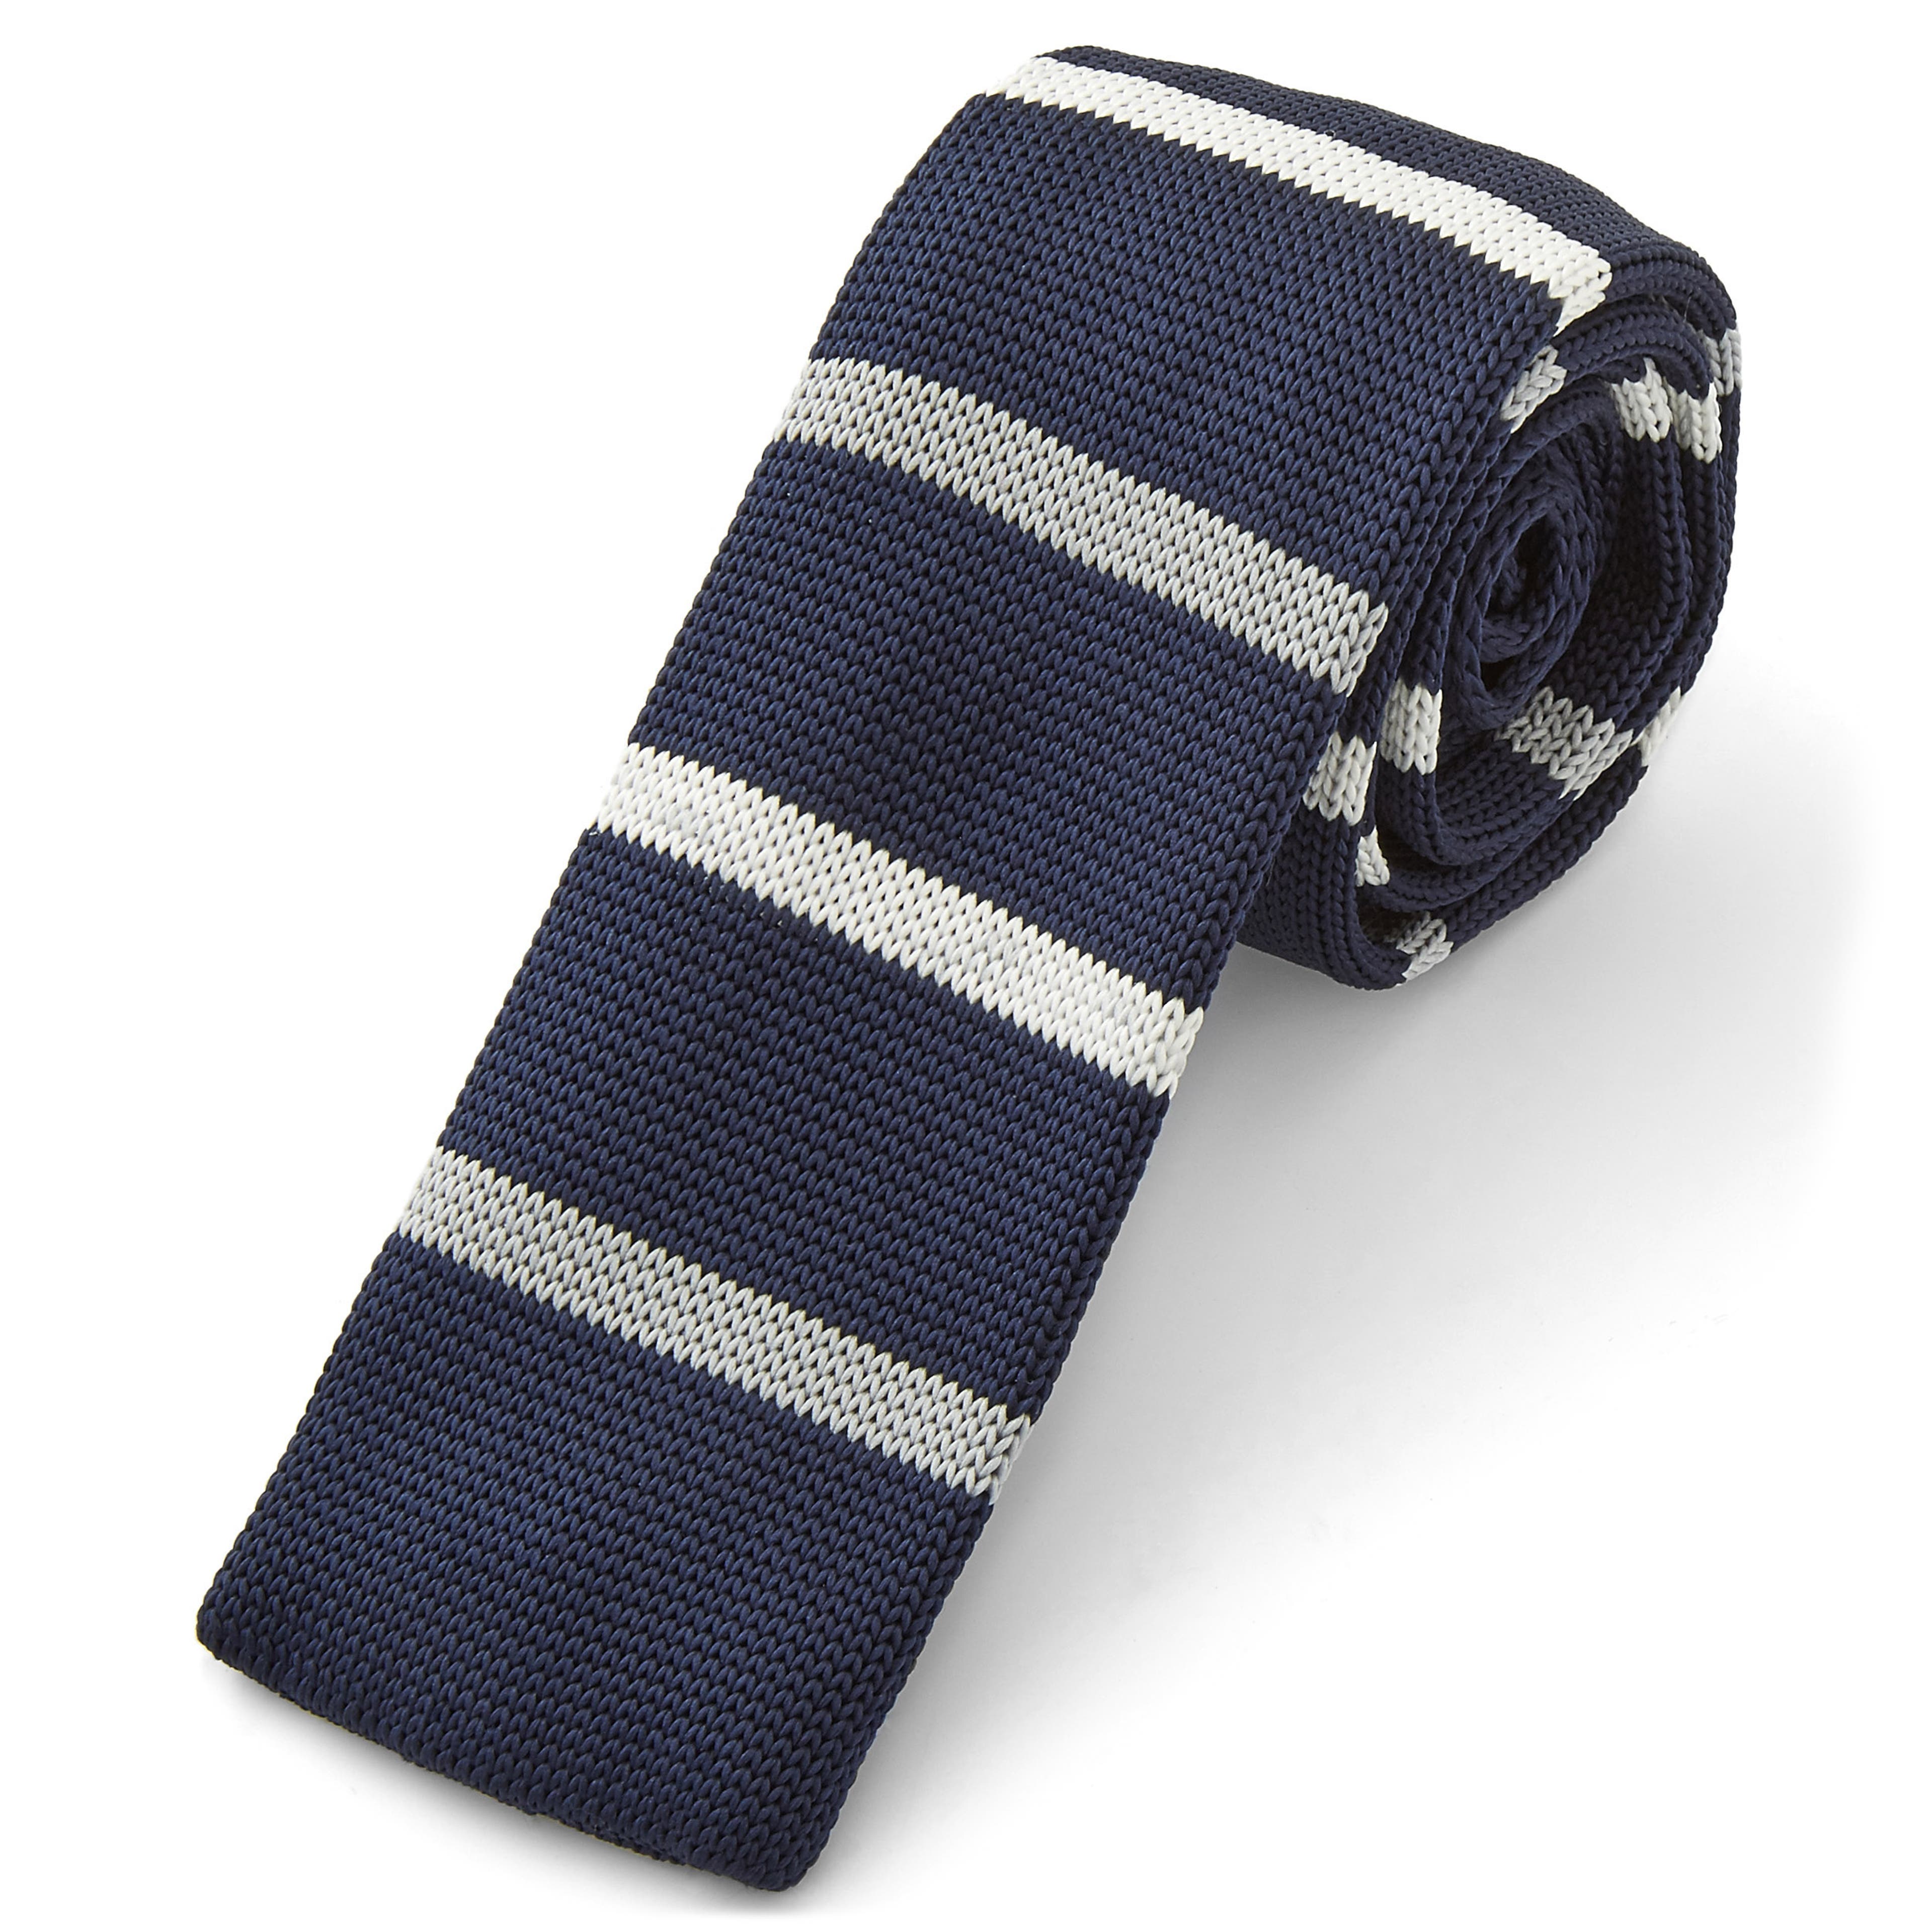 Cravatta blu e bianca lavorata a maglia